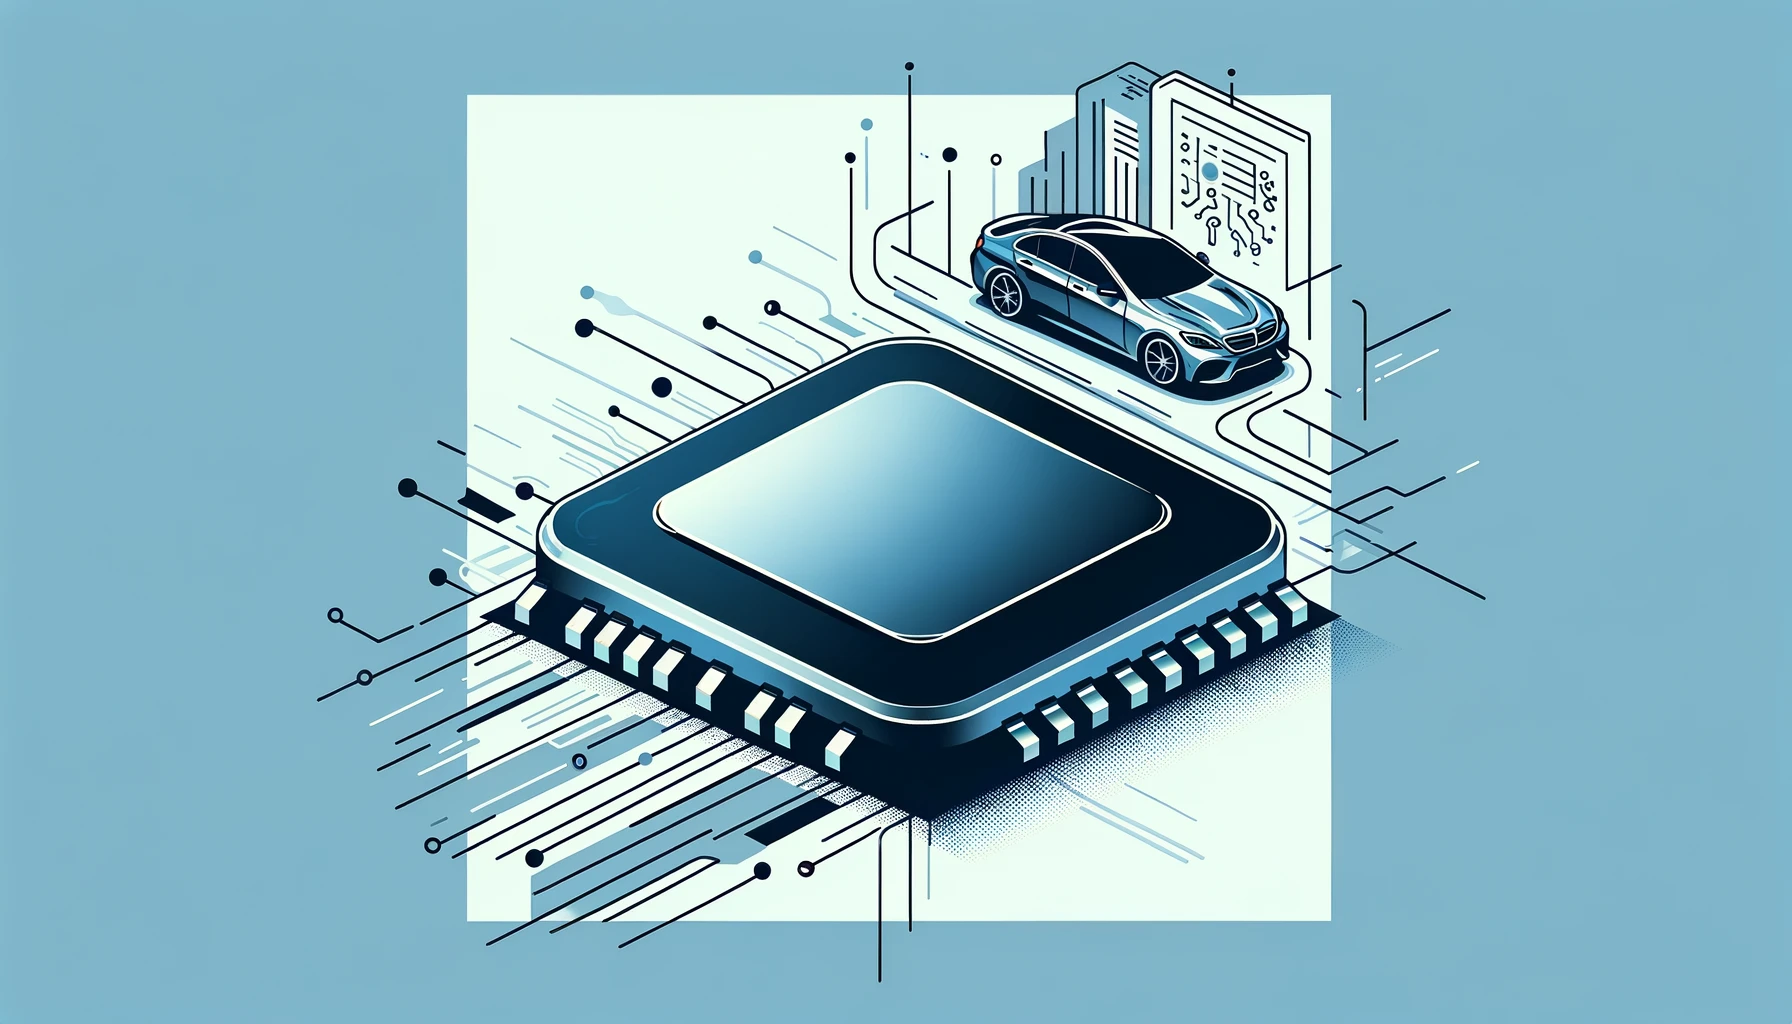 NXP, a manufacturer of automotive computer chips, introduces a new platform.